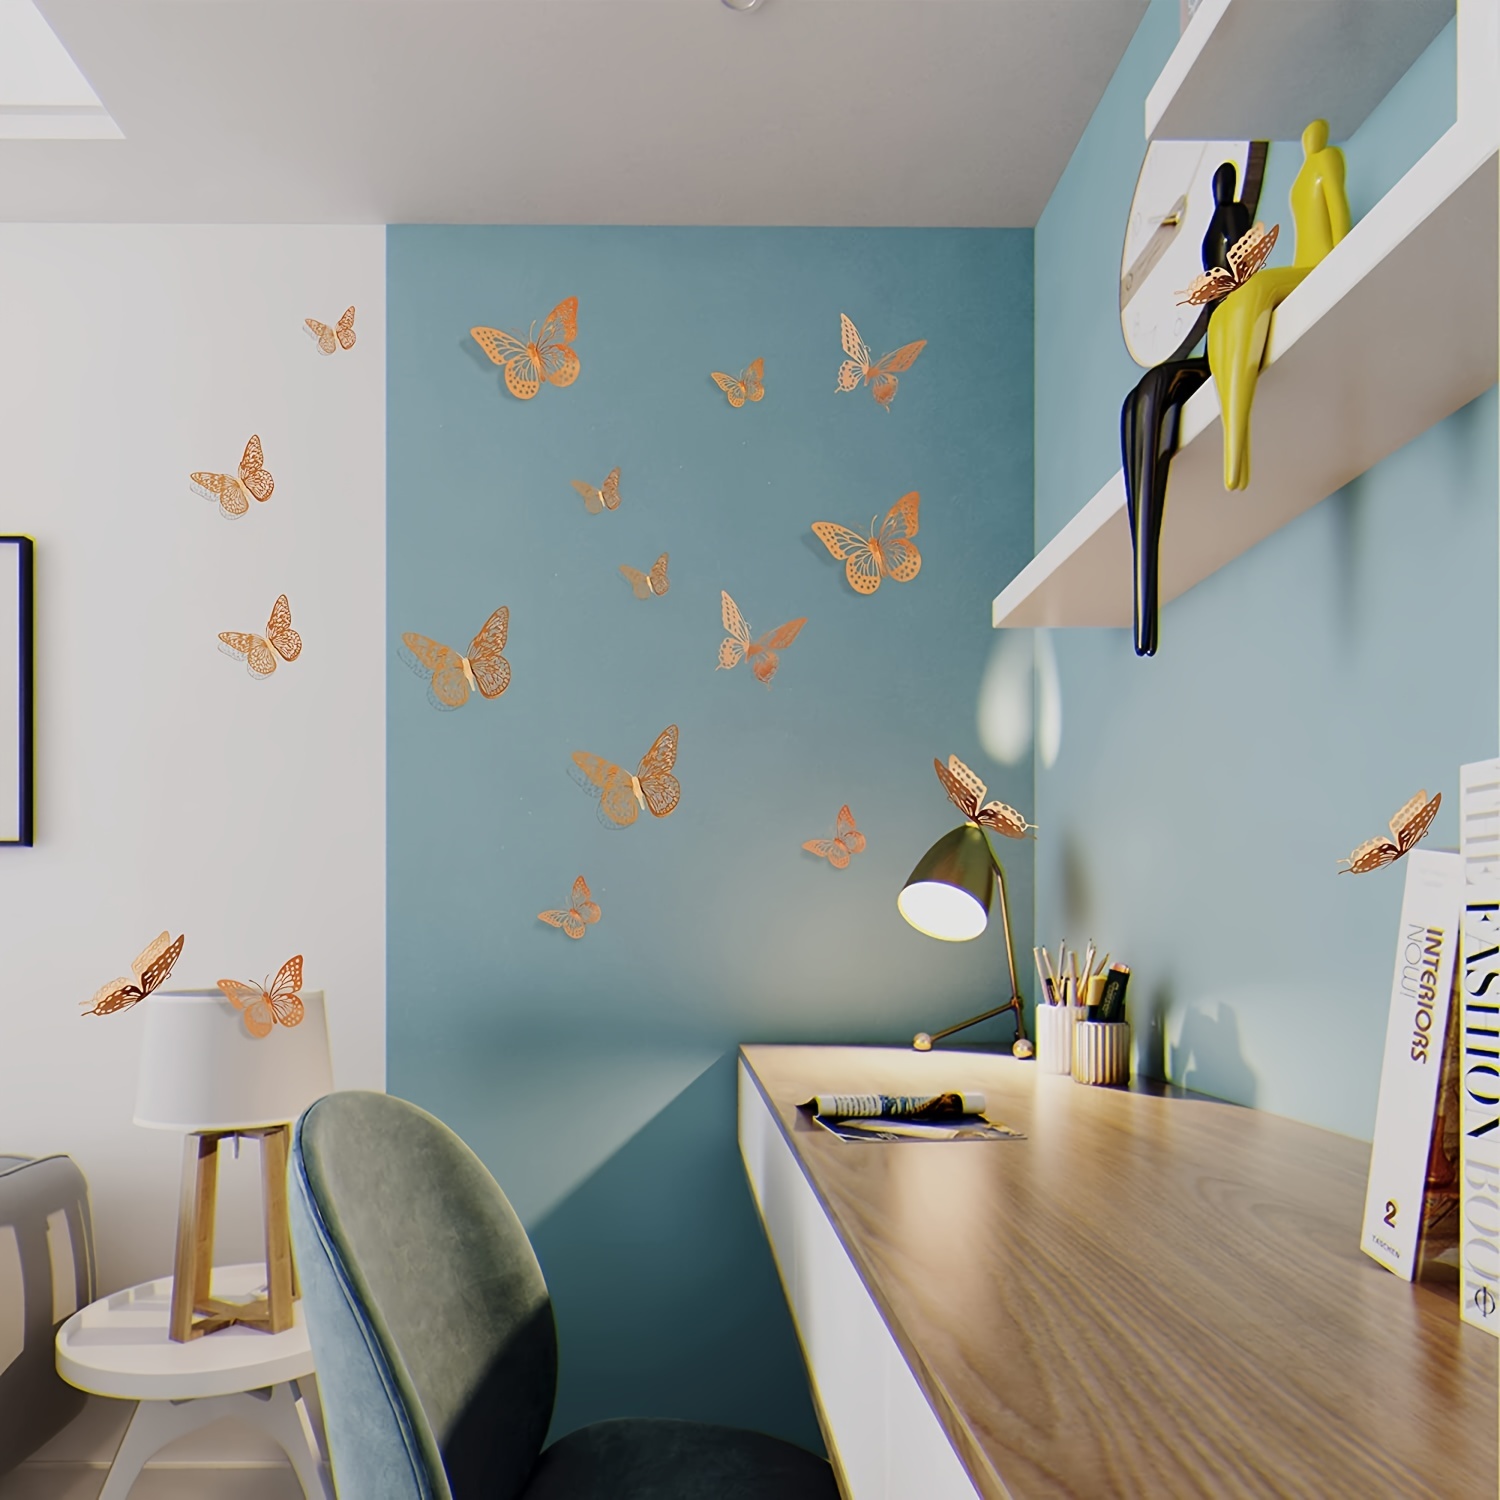 3D Mariposas decorativas de Pared Pegatinas Decoracion para Casas